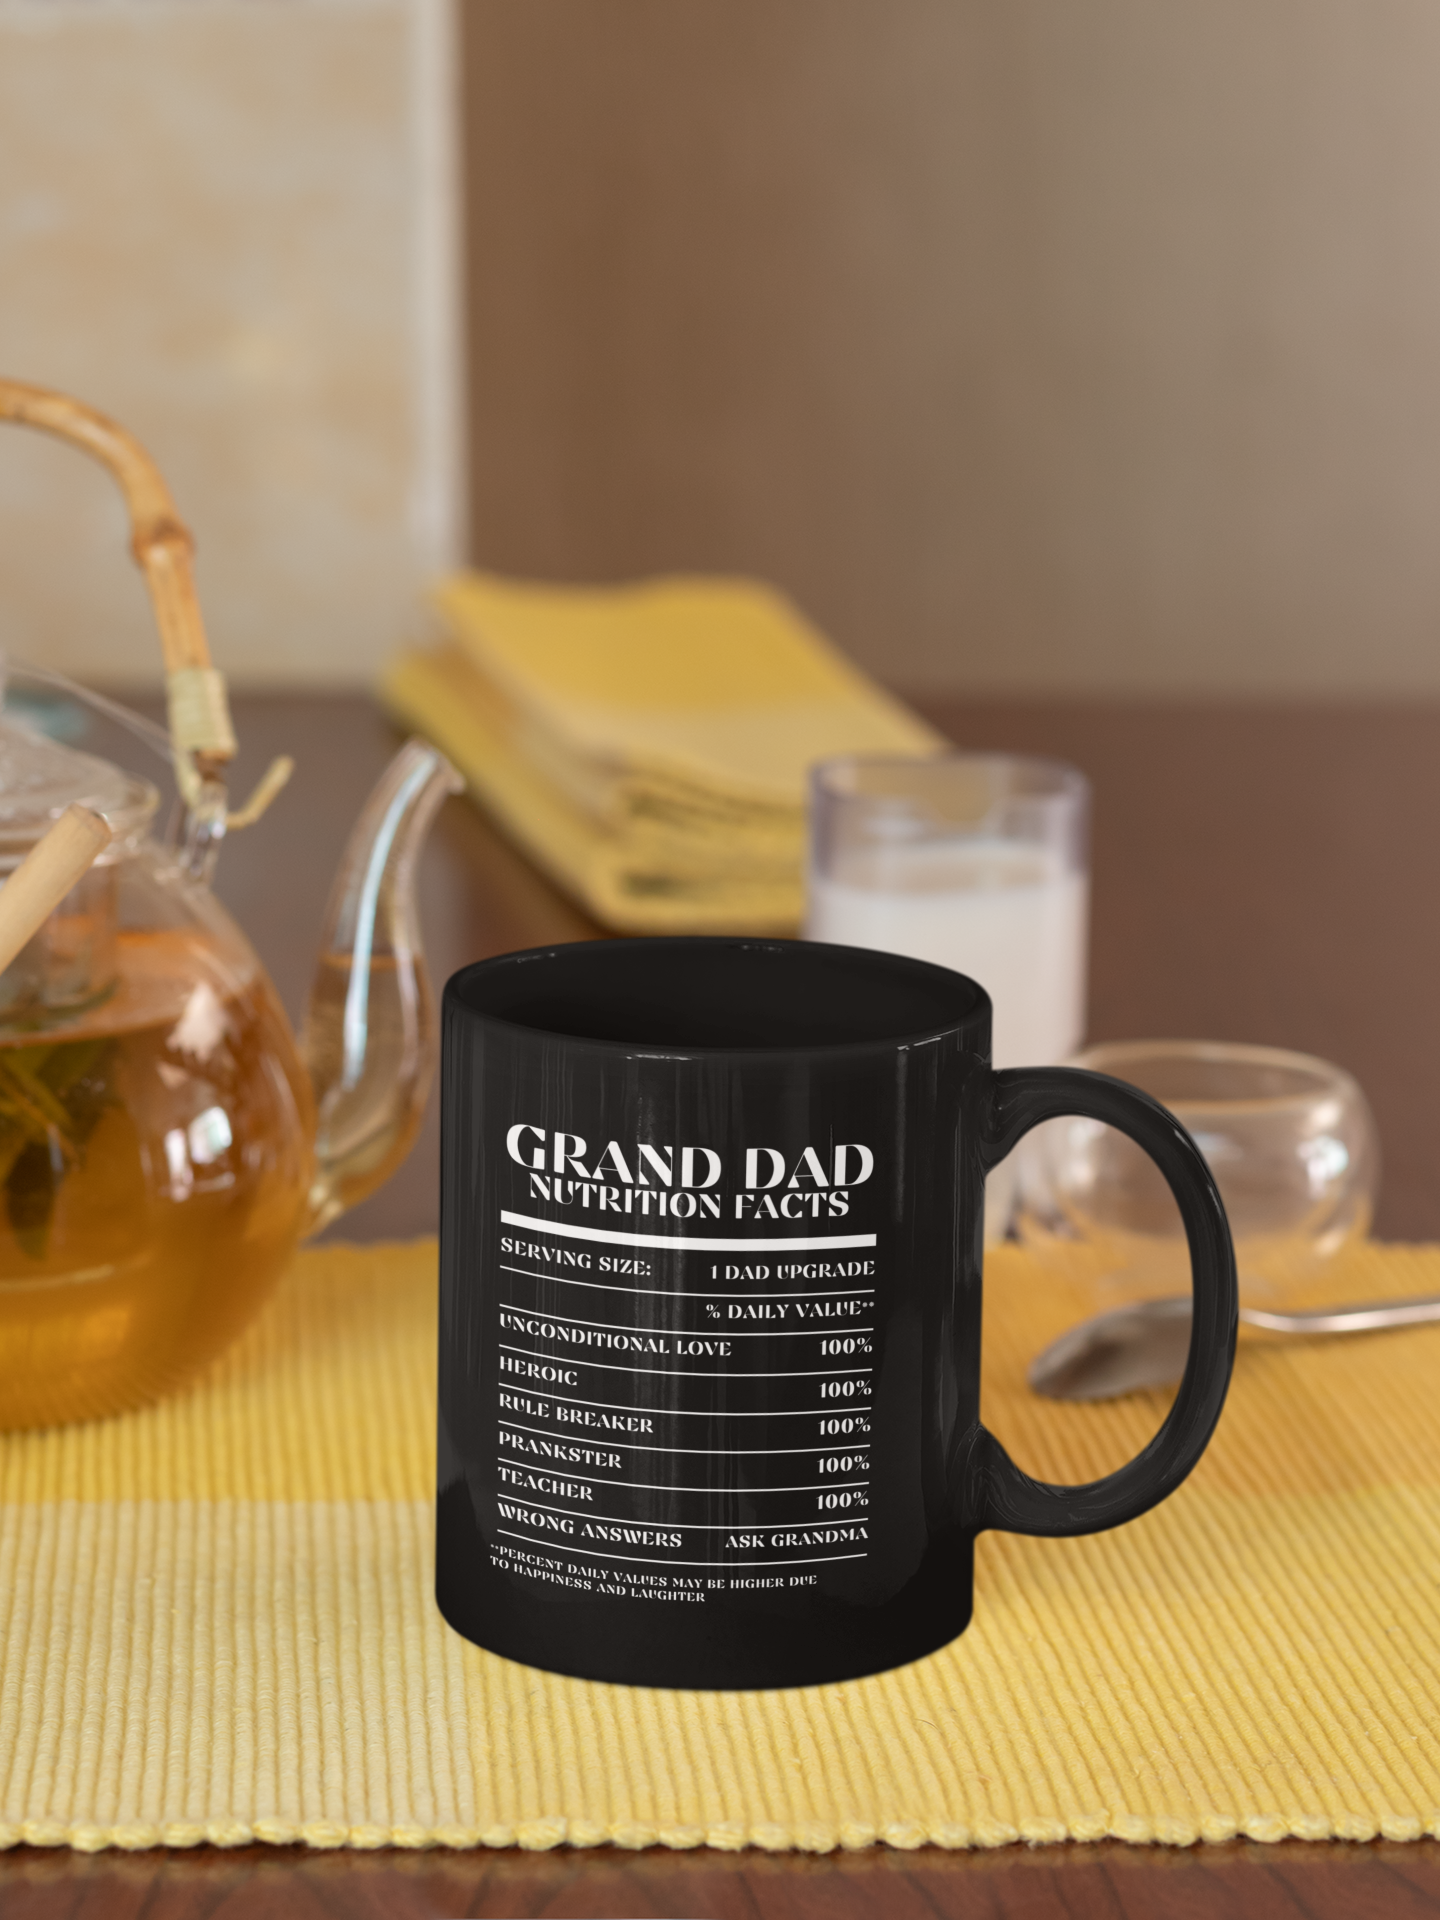 Nutrition Facts Mug - Grand Dad